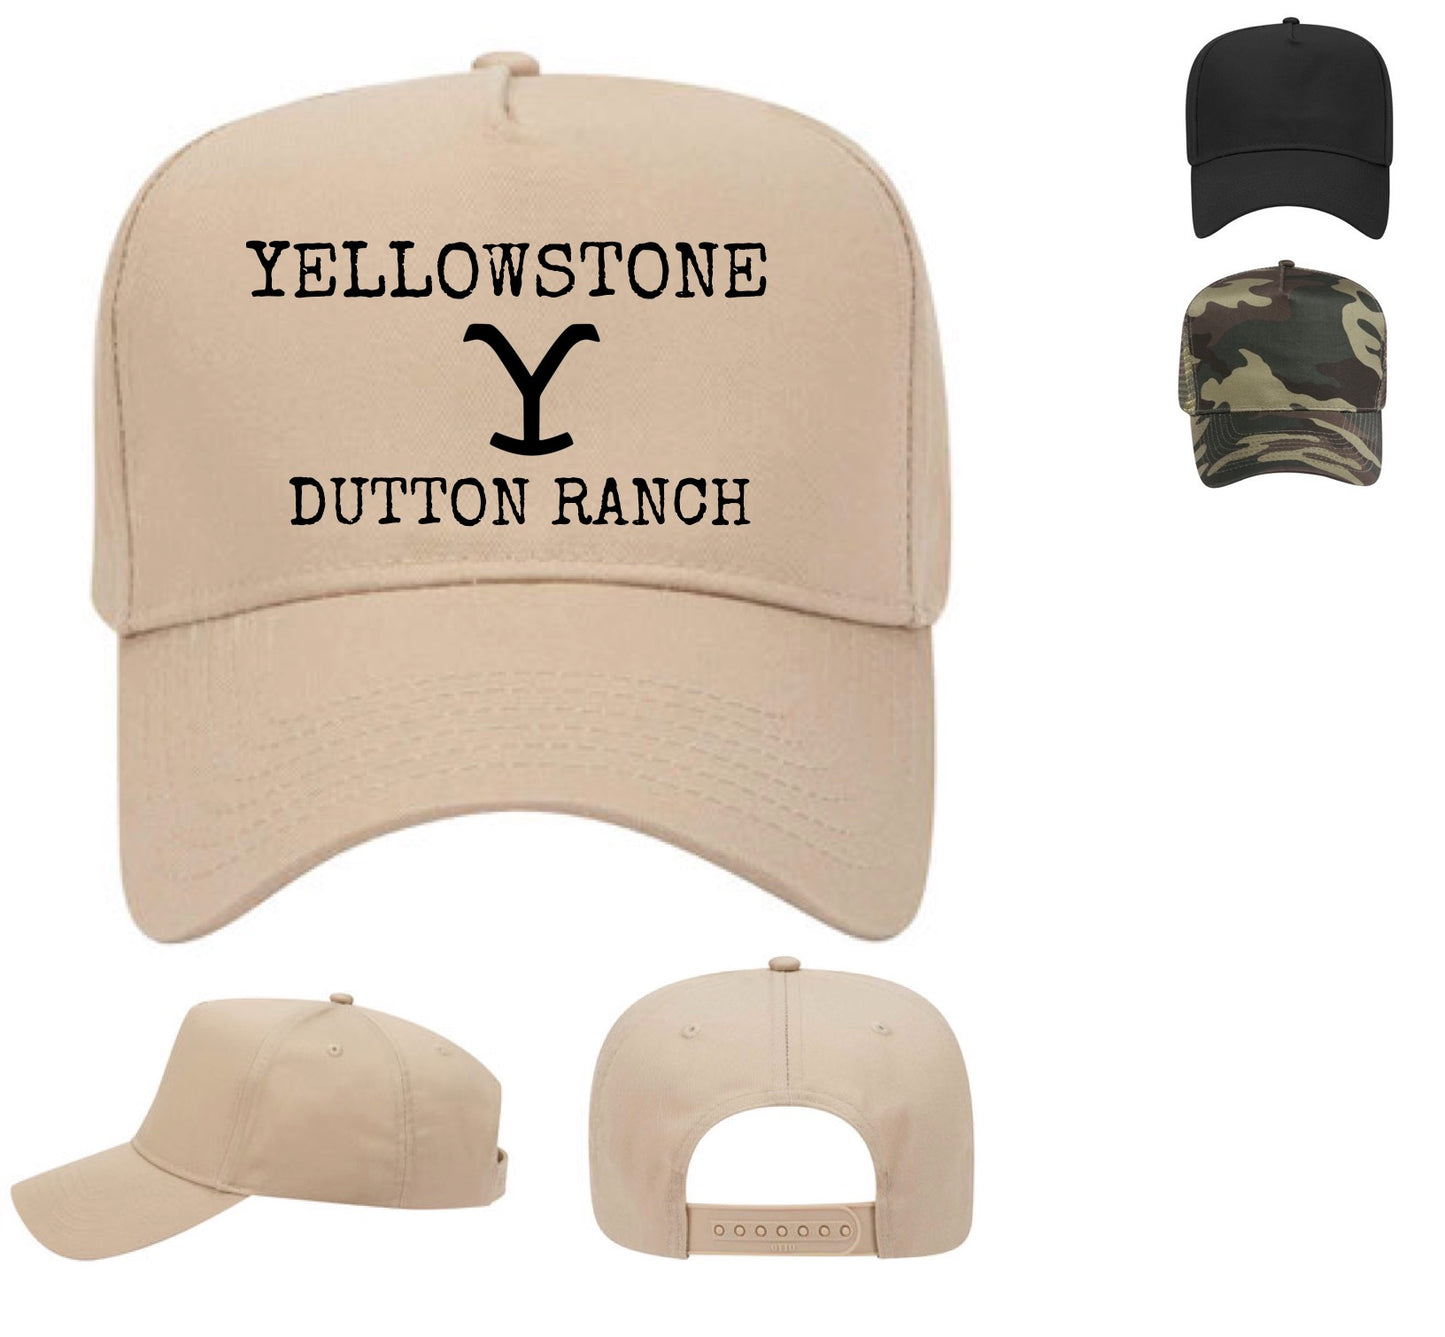 Yellowstone Dutton Ranch Hat (FREE Shipping)